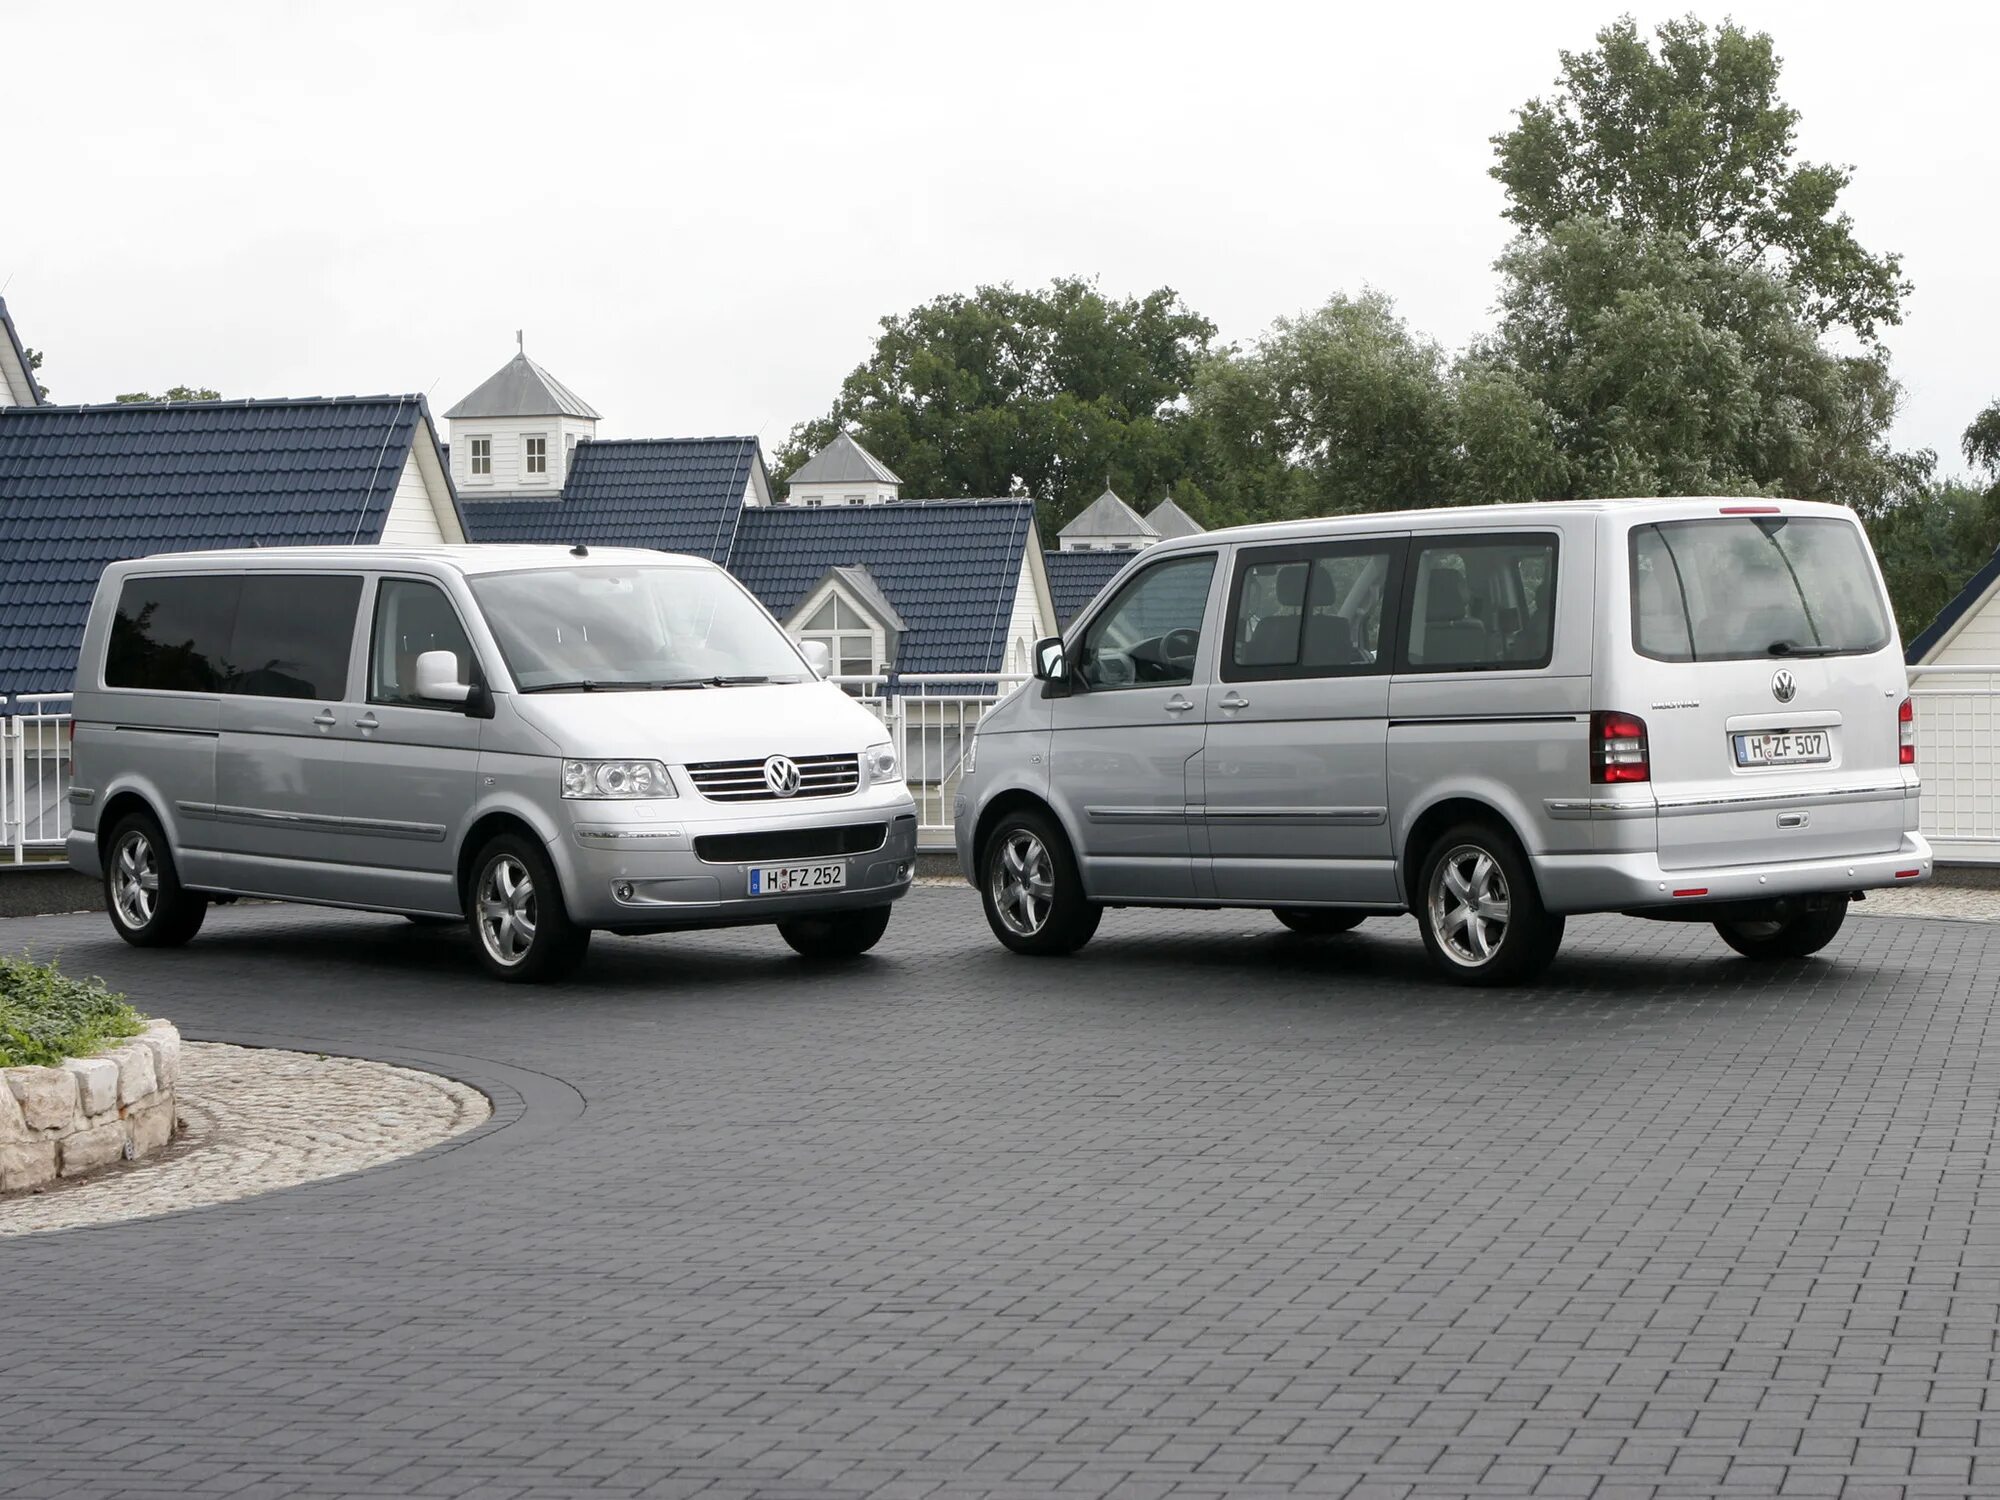 Фольксваген Мультивен т5. Volkswagen Transporter, Caravelle, Multivan с 2003. Multivan t5 2003. Фольксваген т5 2003. Фольксваген т5 мультиван